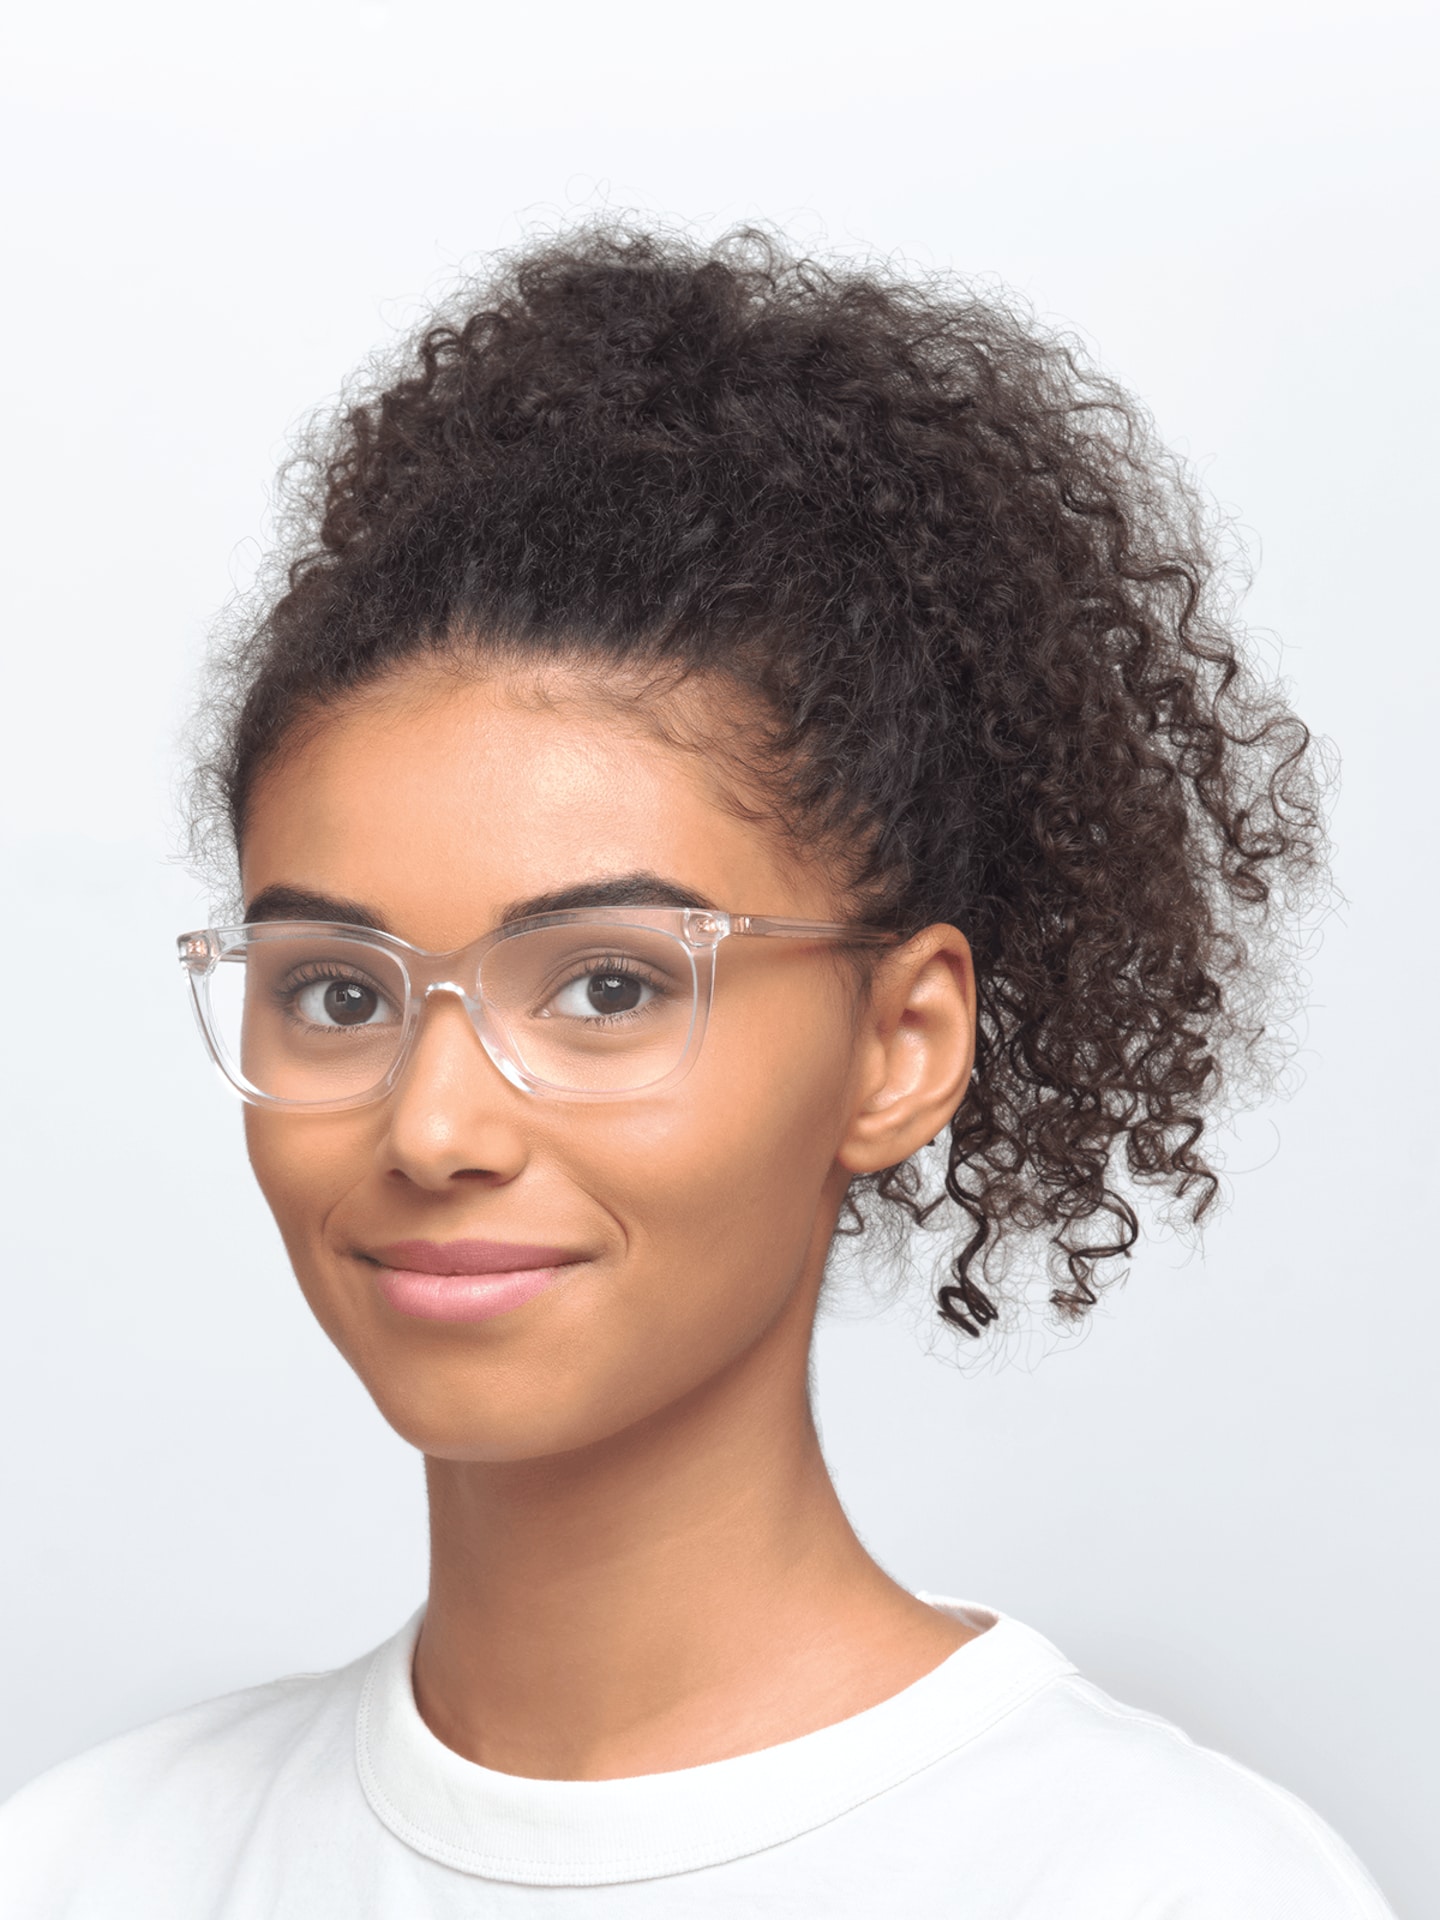 Michael Kors Clear Transparent Eyeglasses ® | Free Shipping